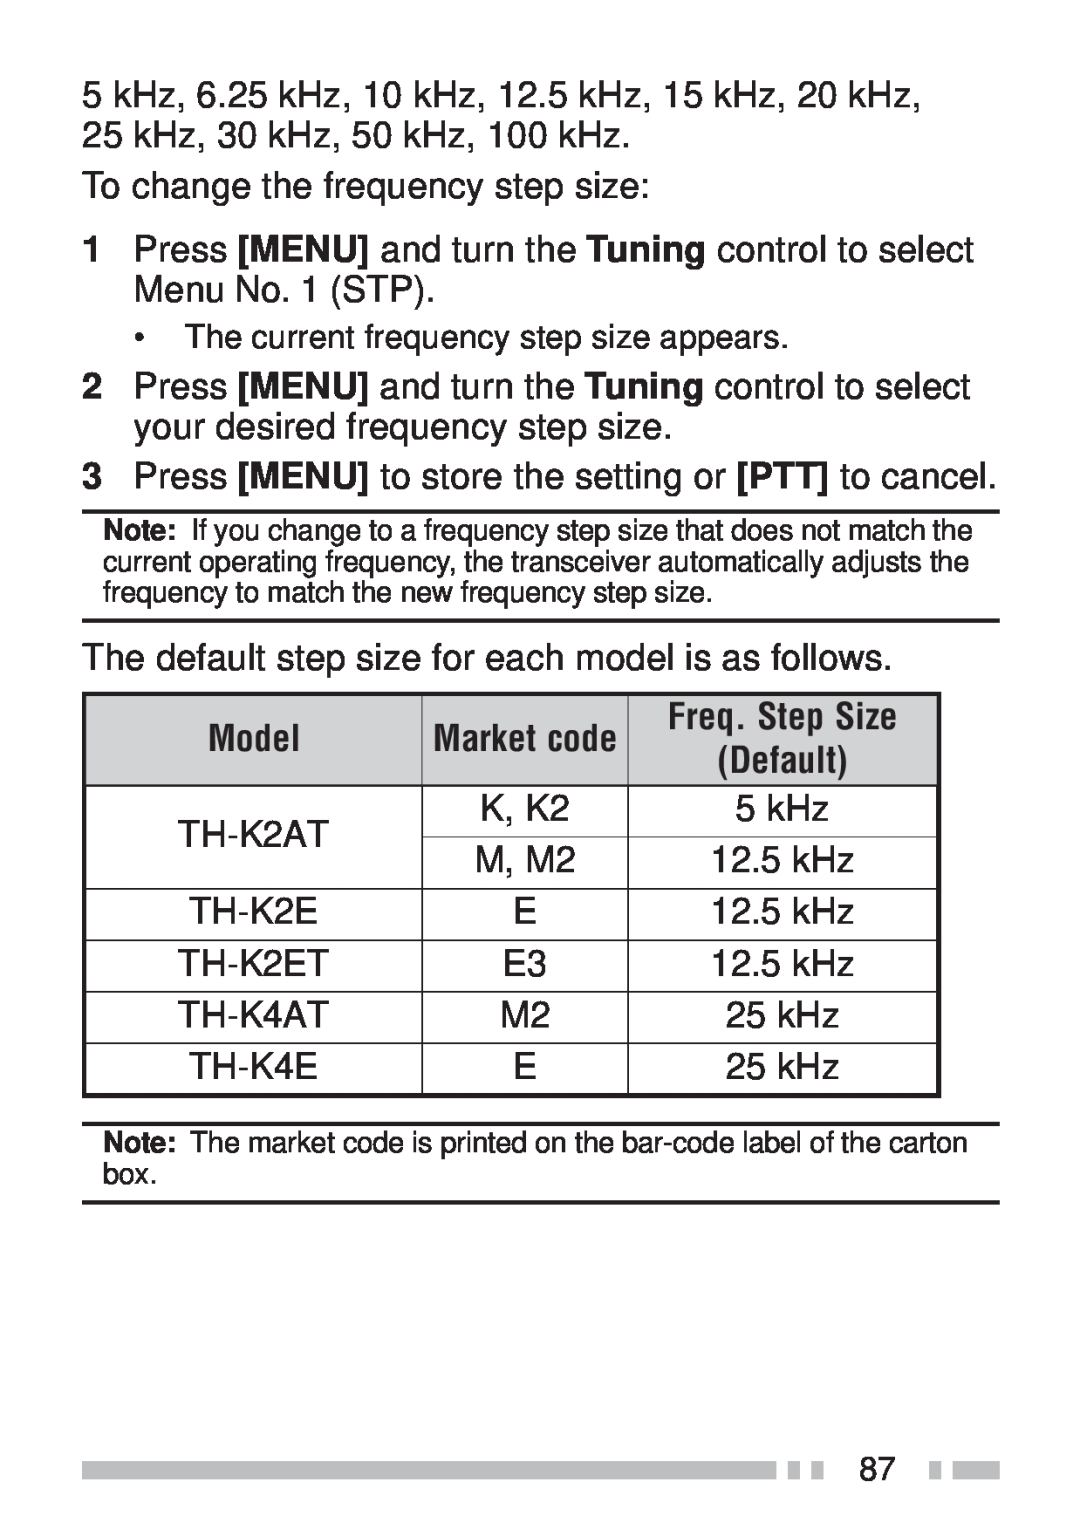 Kenwood TH-K4AT, TH-KAE, TH-K2ET, TH-K2AT instruction manual Model, Freq. Step Size 